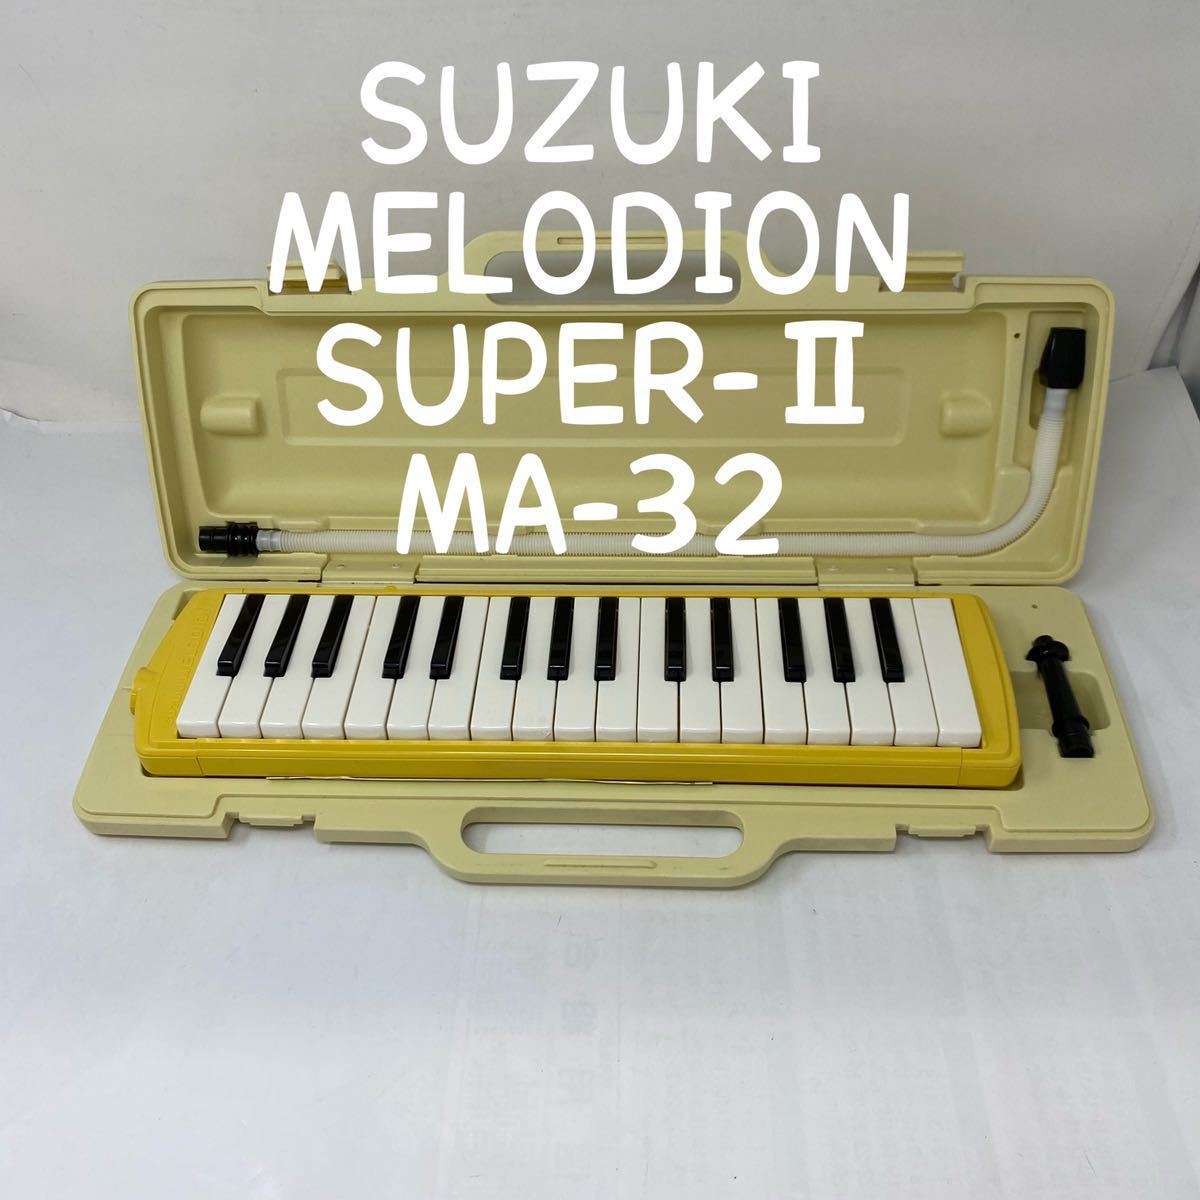 JT12 [Используется] Suzuki Melodion Super-II MA-32 клавишная гармоника Pianica